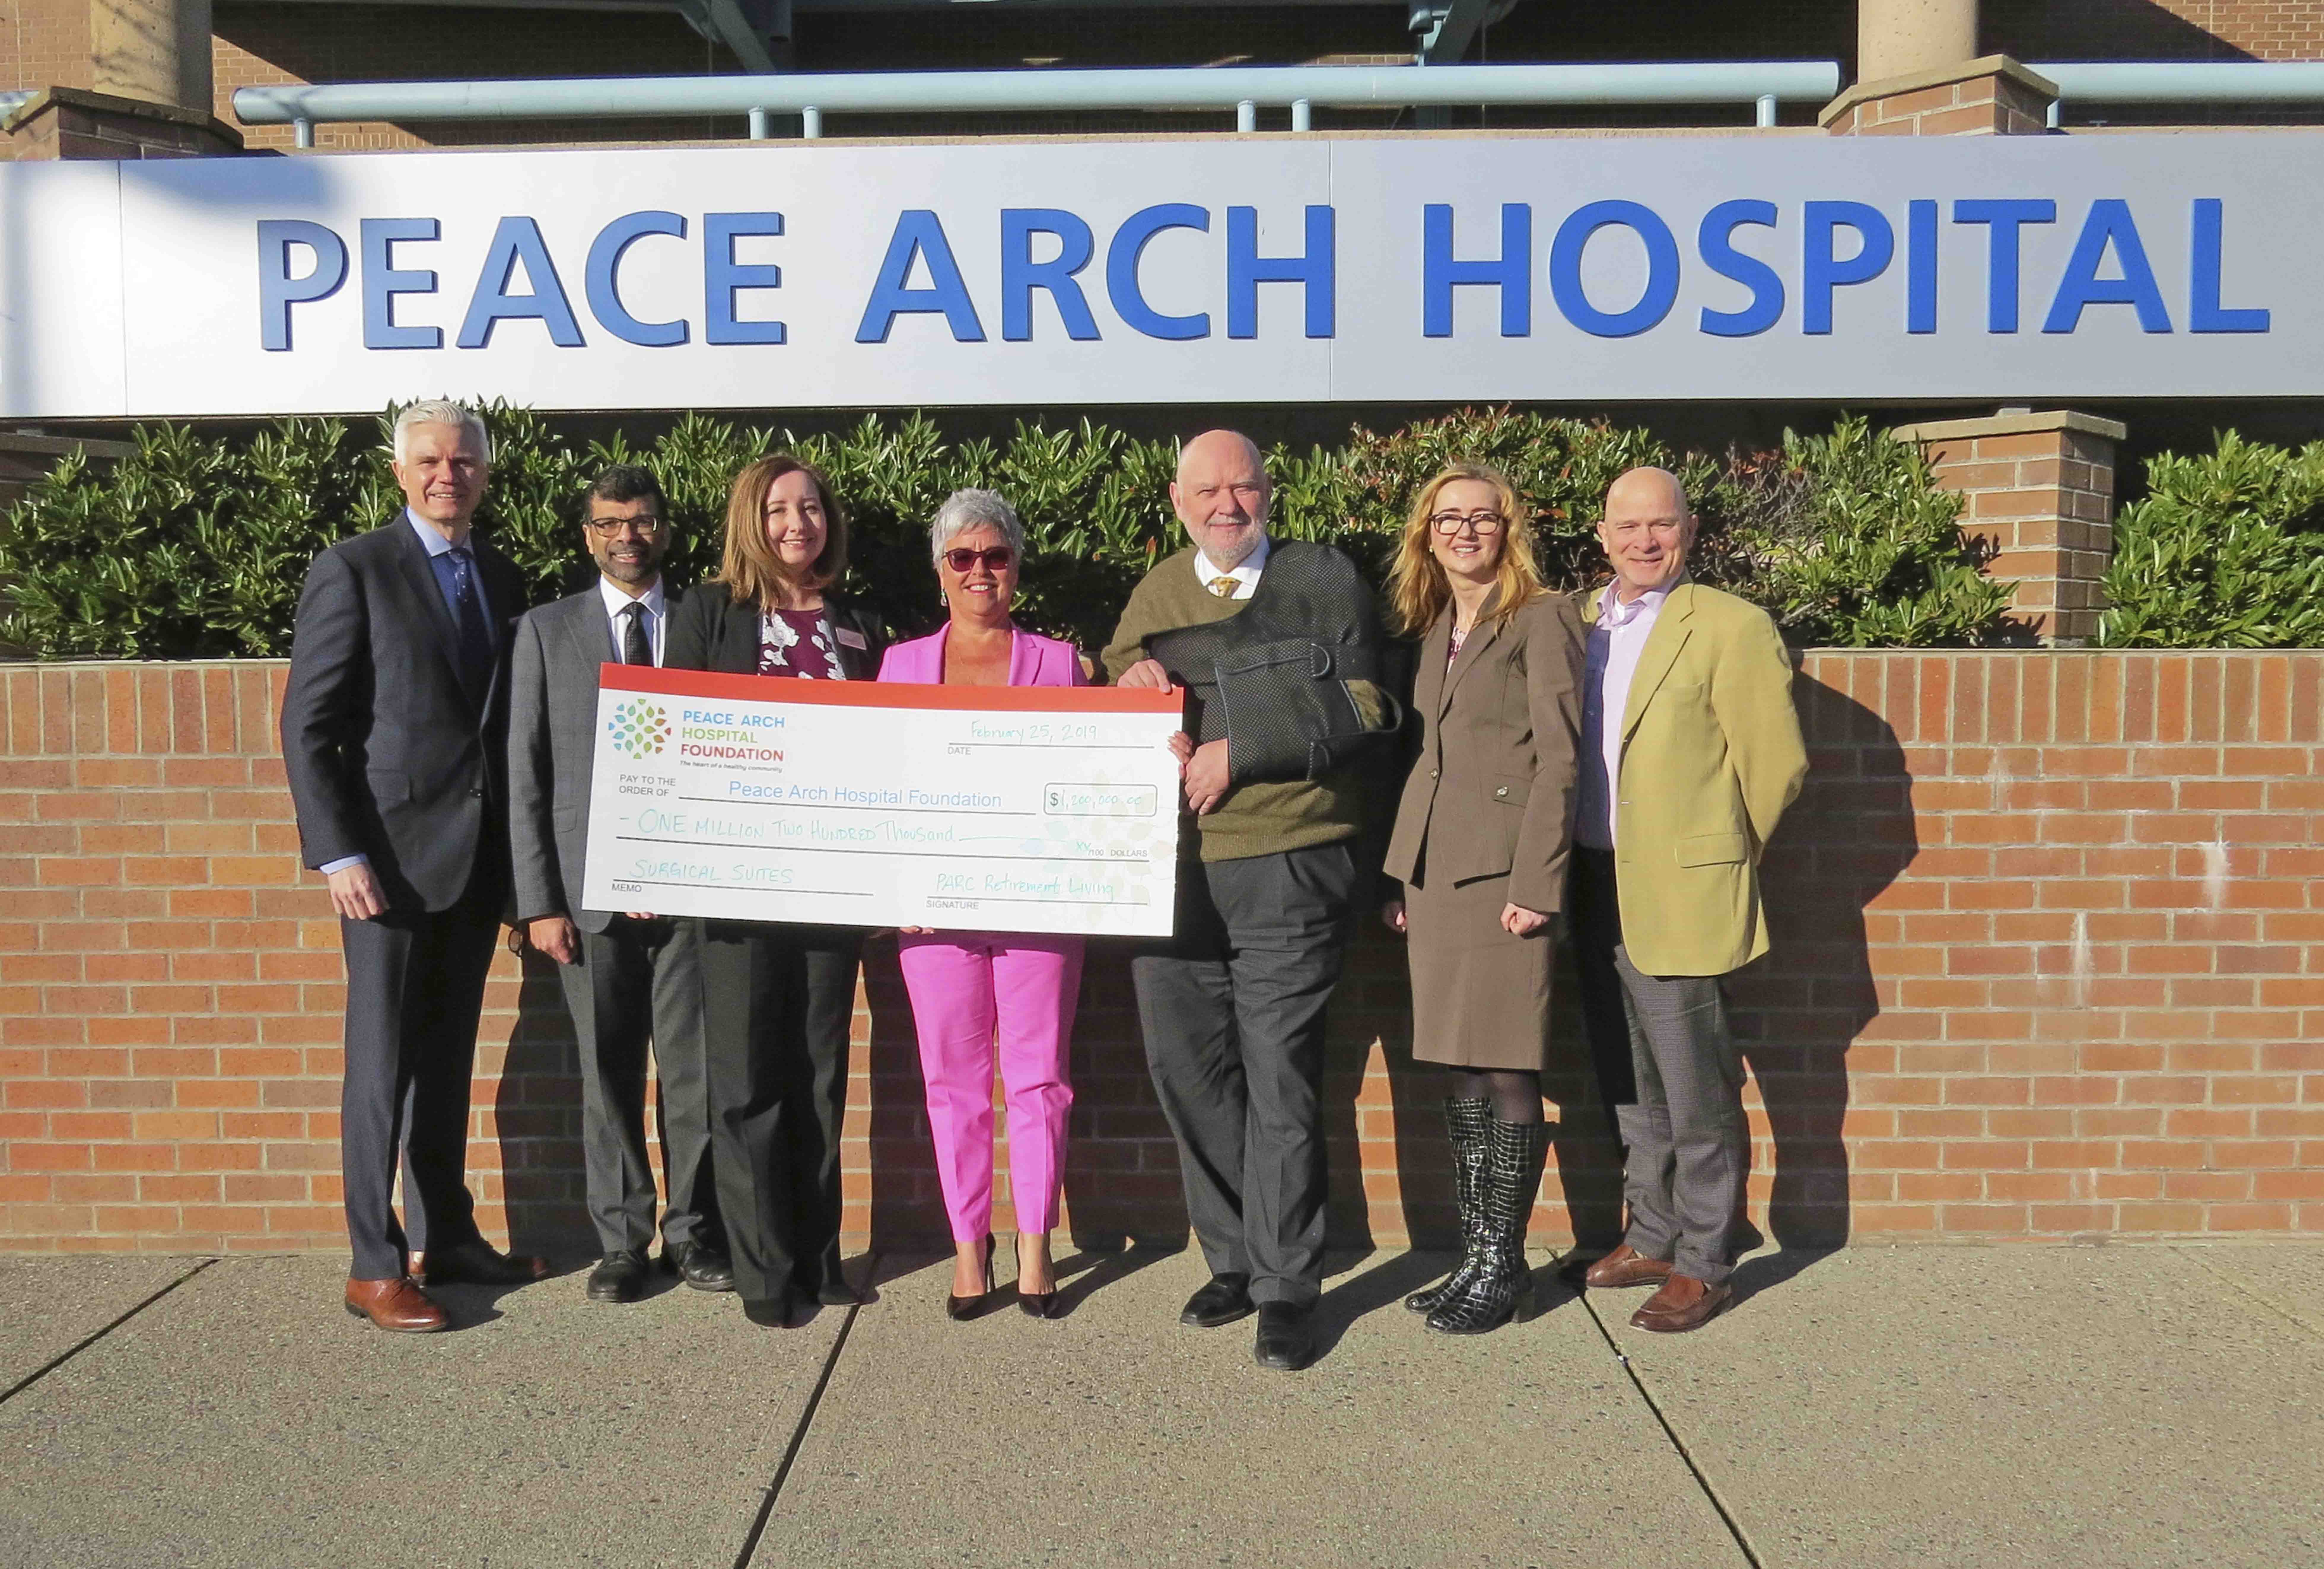 PARC representatives and Peace Arch Hospital Foundation